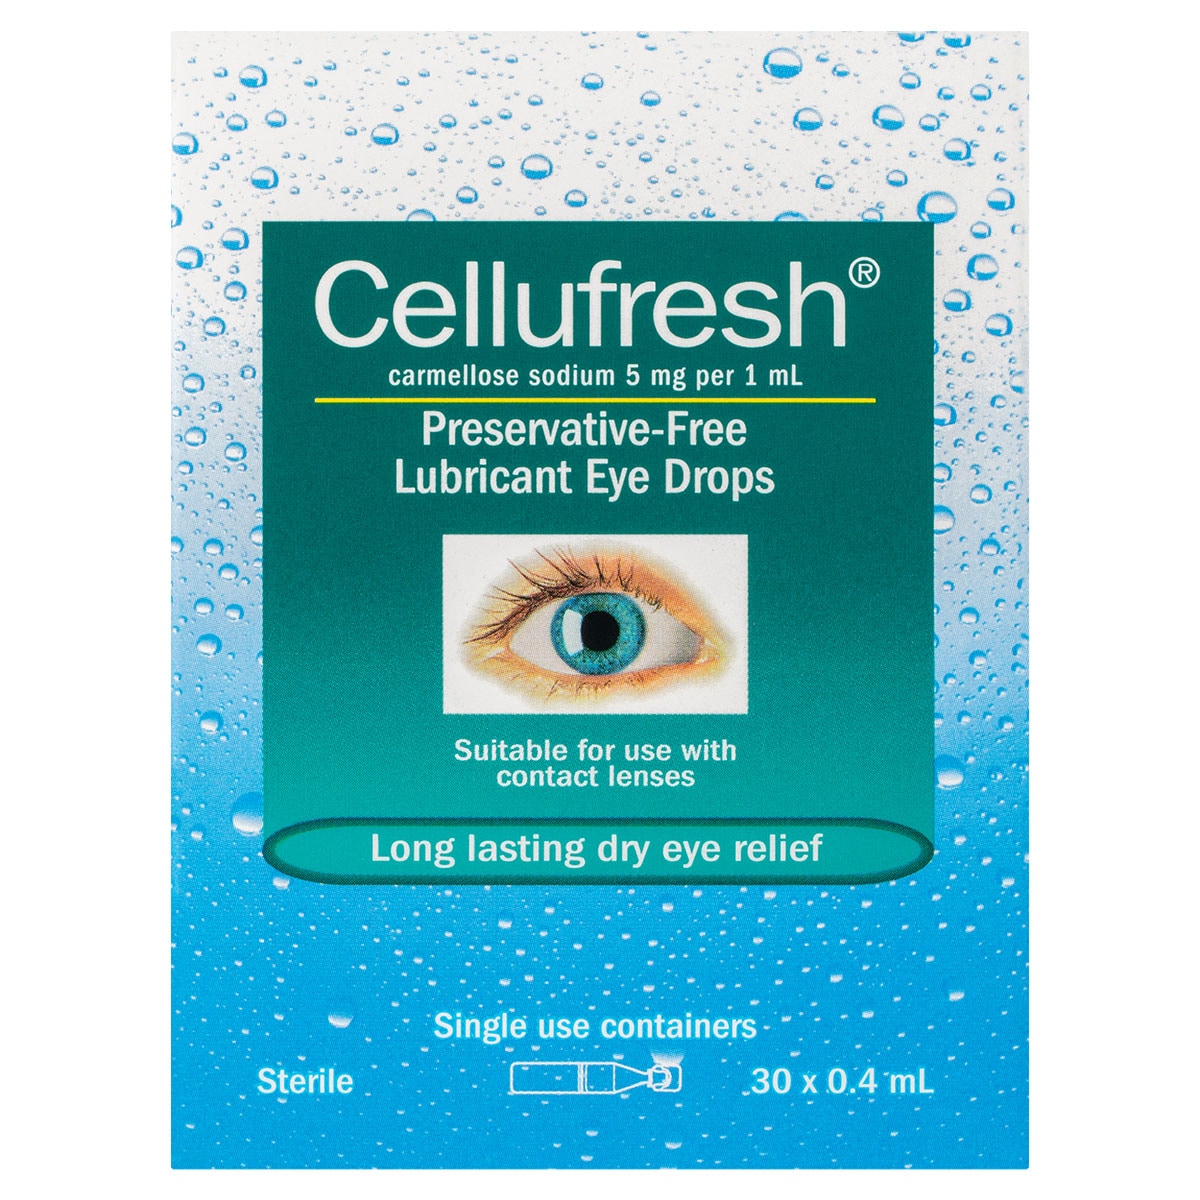 Cellufresh Lubricant Eye Drops Preservative Free 0.4ml x 30 Vials